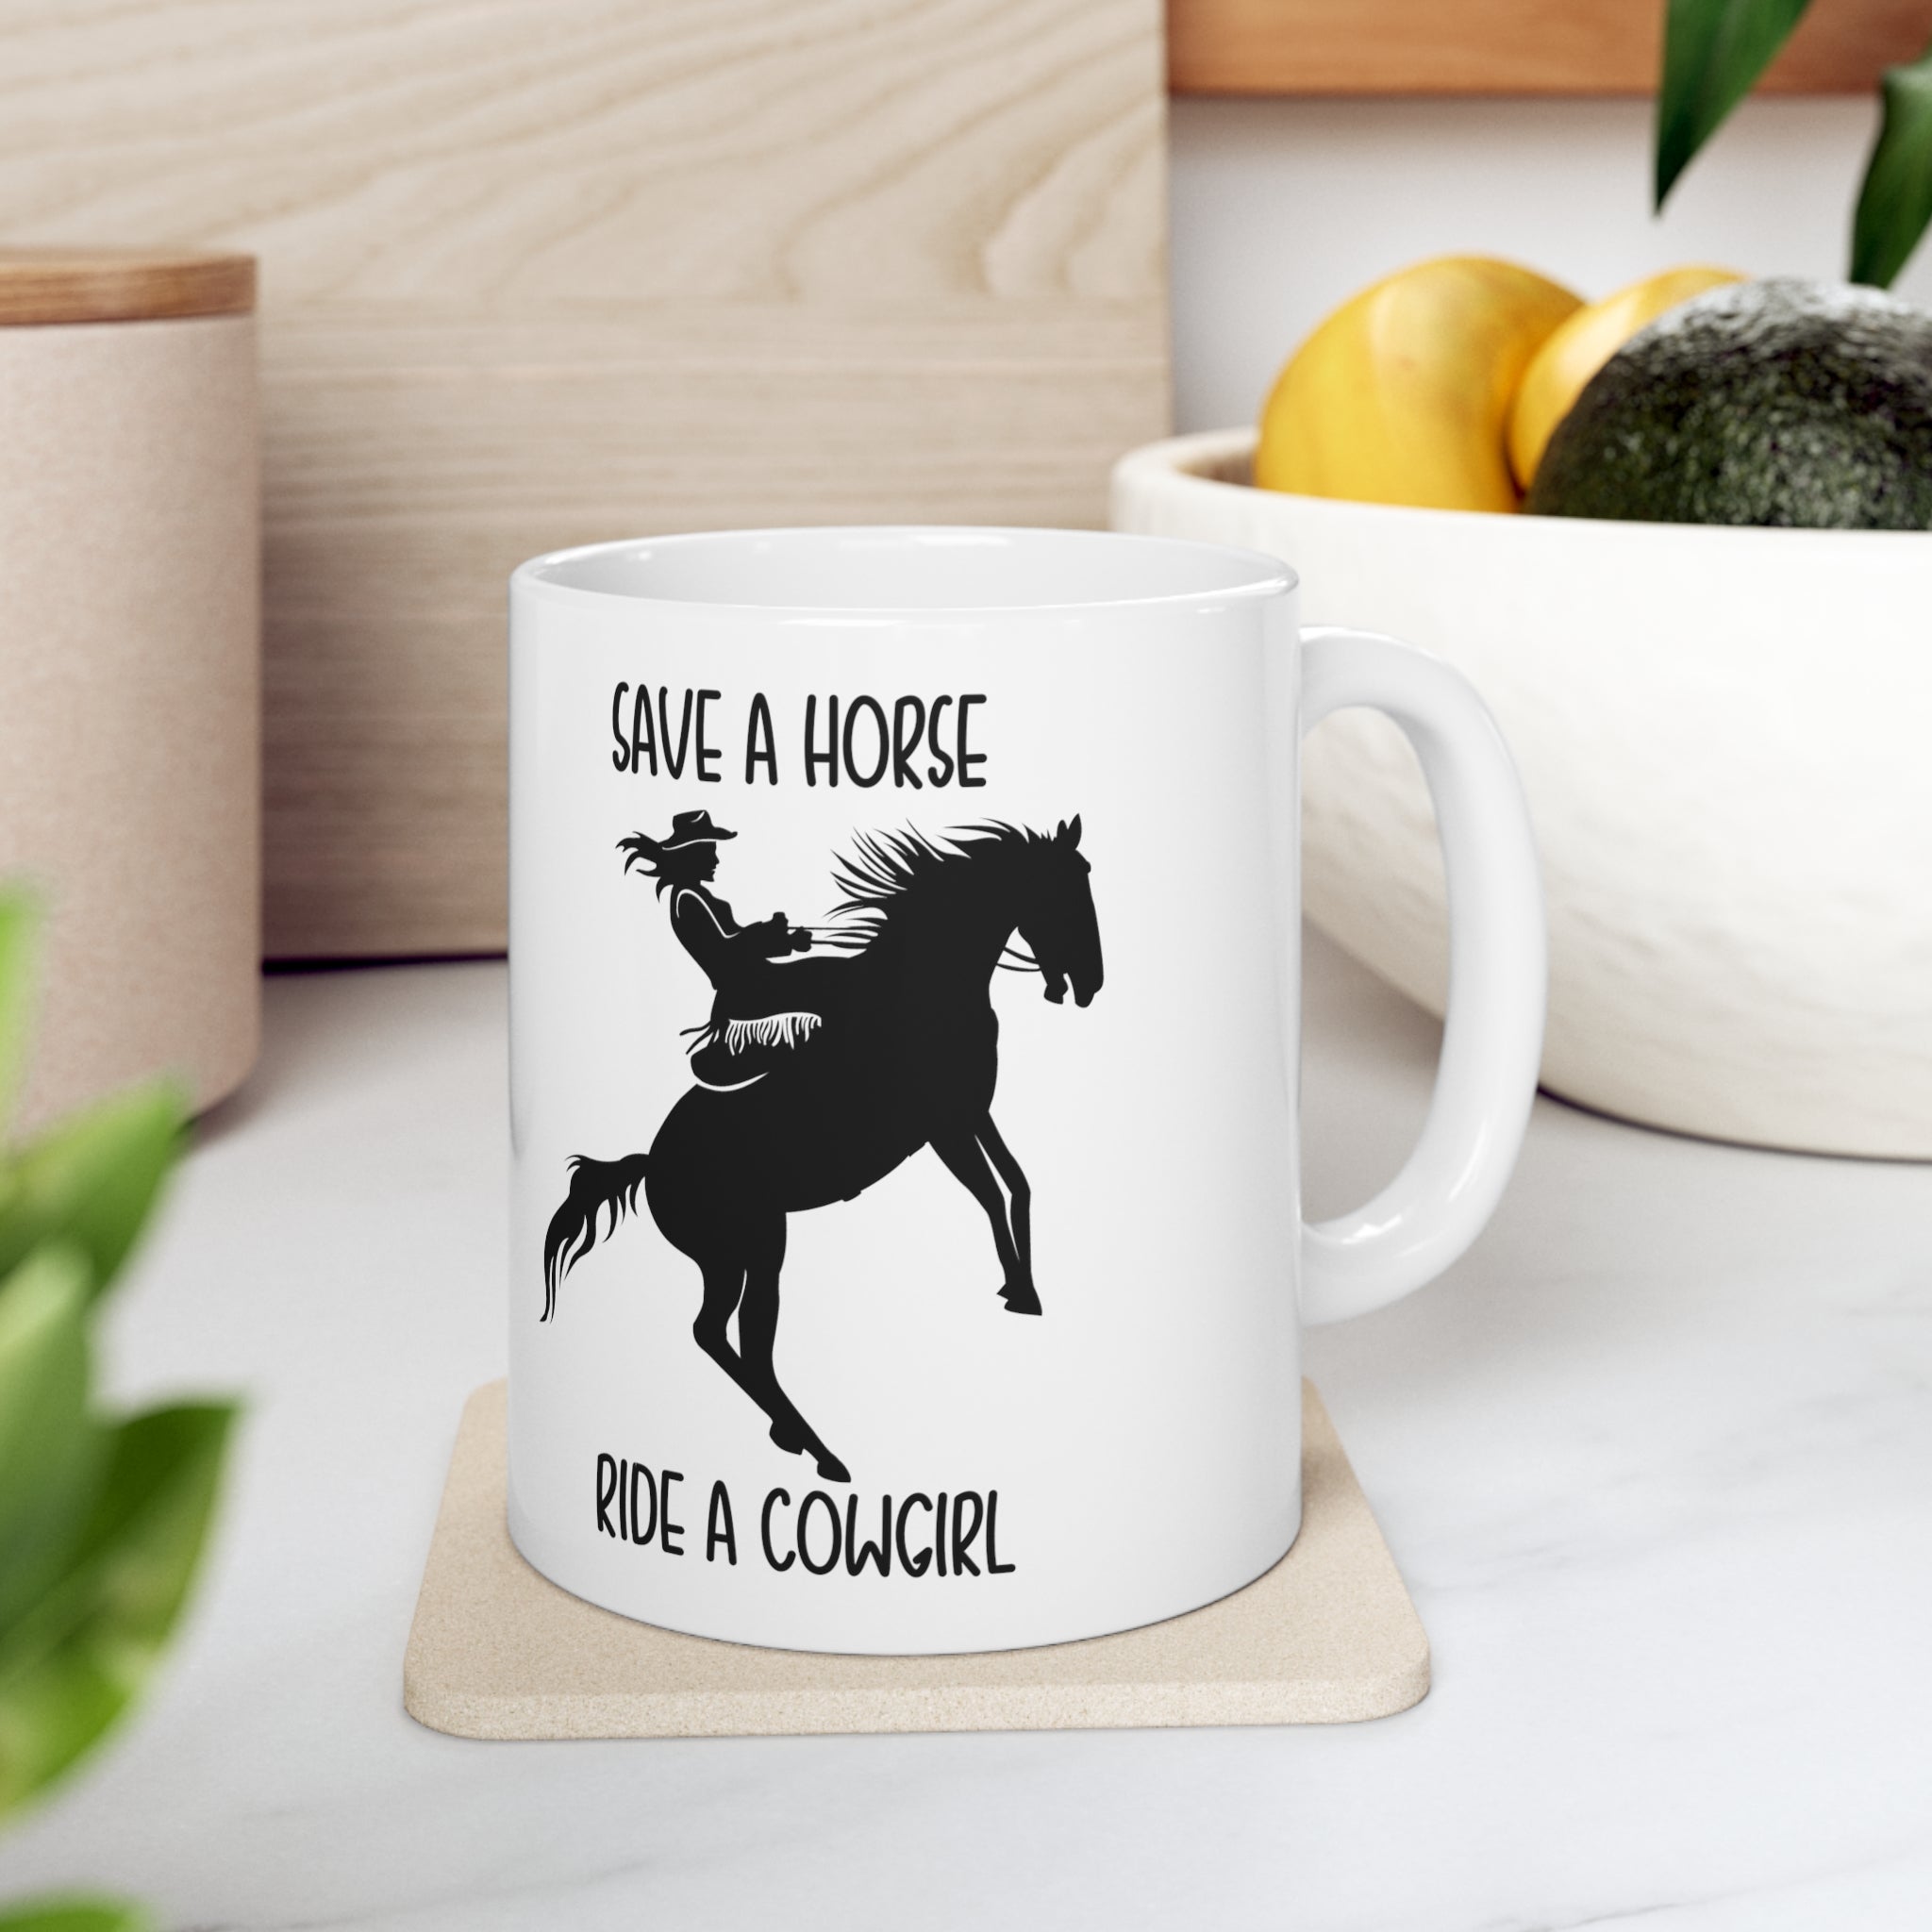 Cowgirl Coffee Cup Save A Horse Ride A Cowgirl Ceramic Mug 11 oz Tea Cup Hot Cocoa Mug